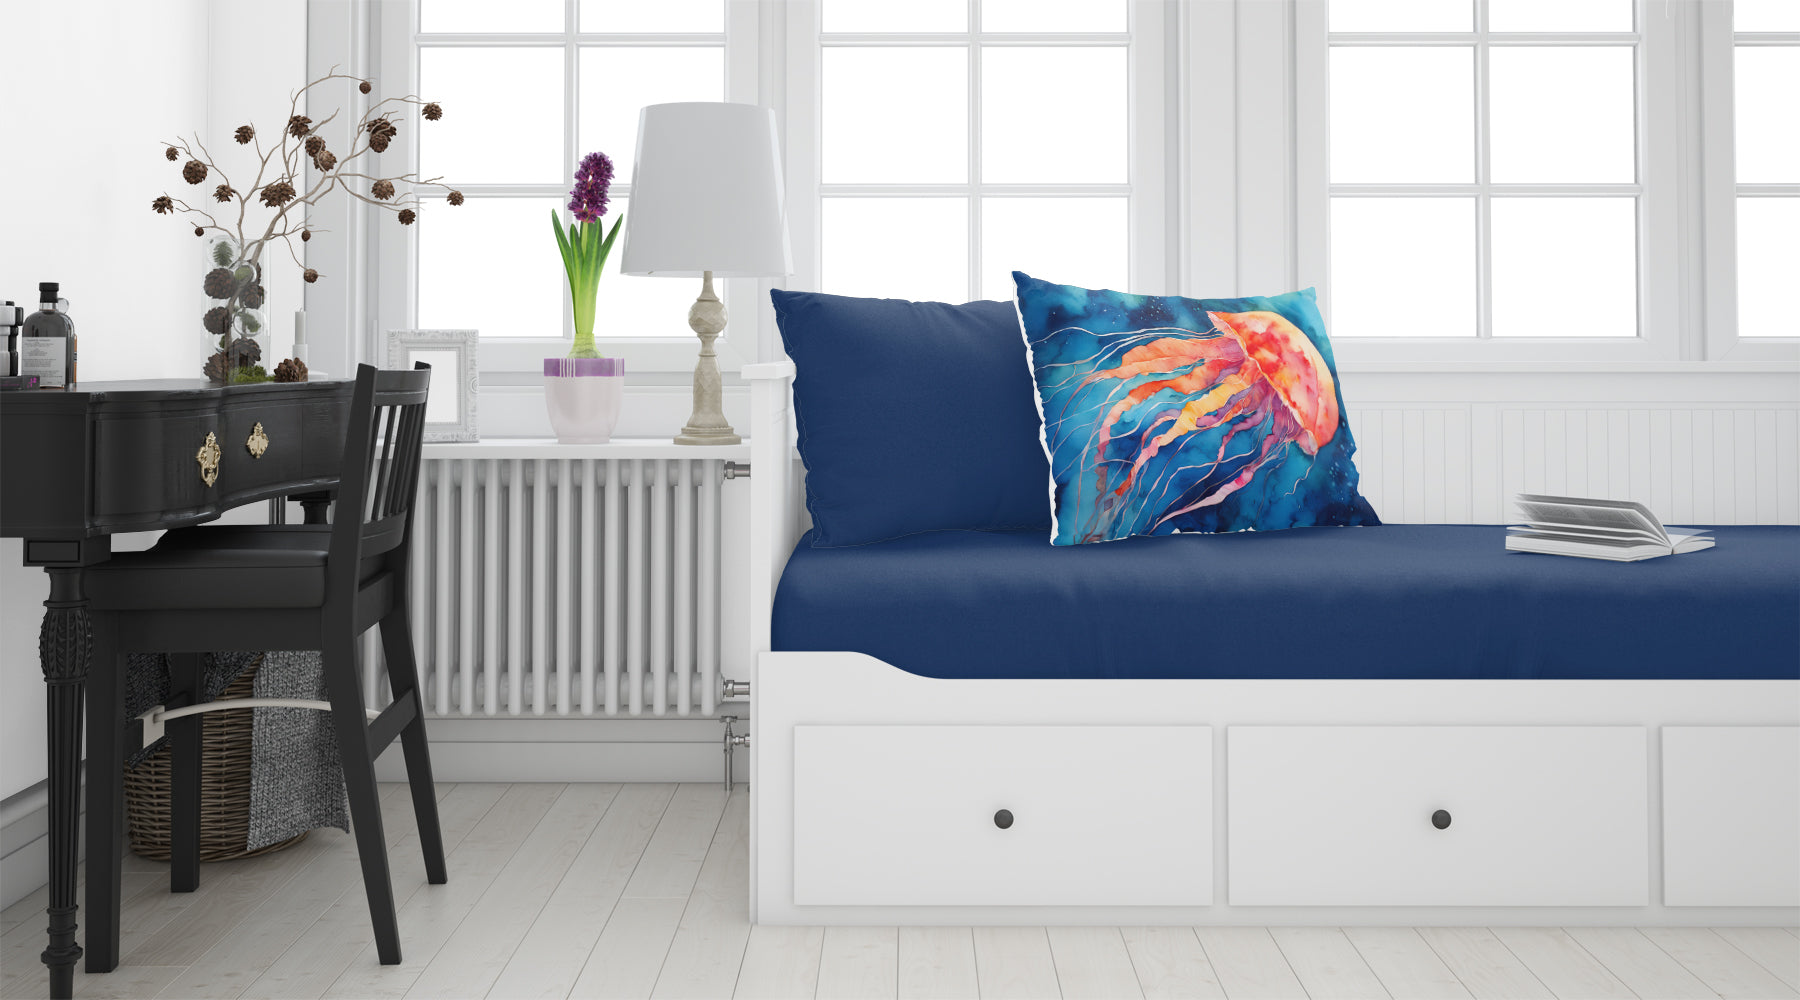 Buy this Jellyfish Standard Pillowcase